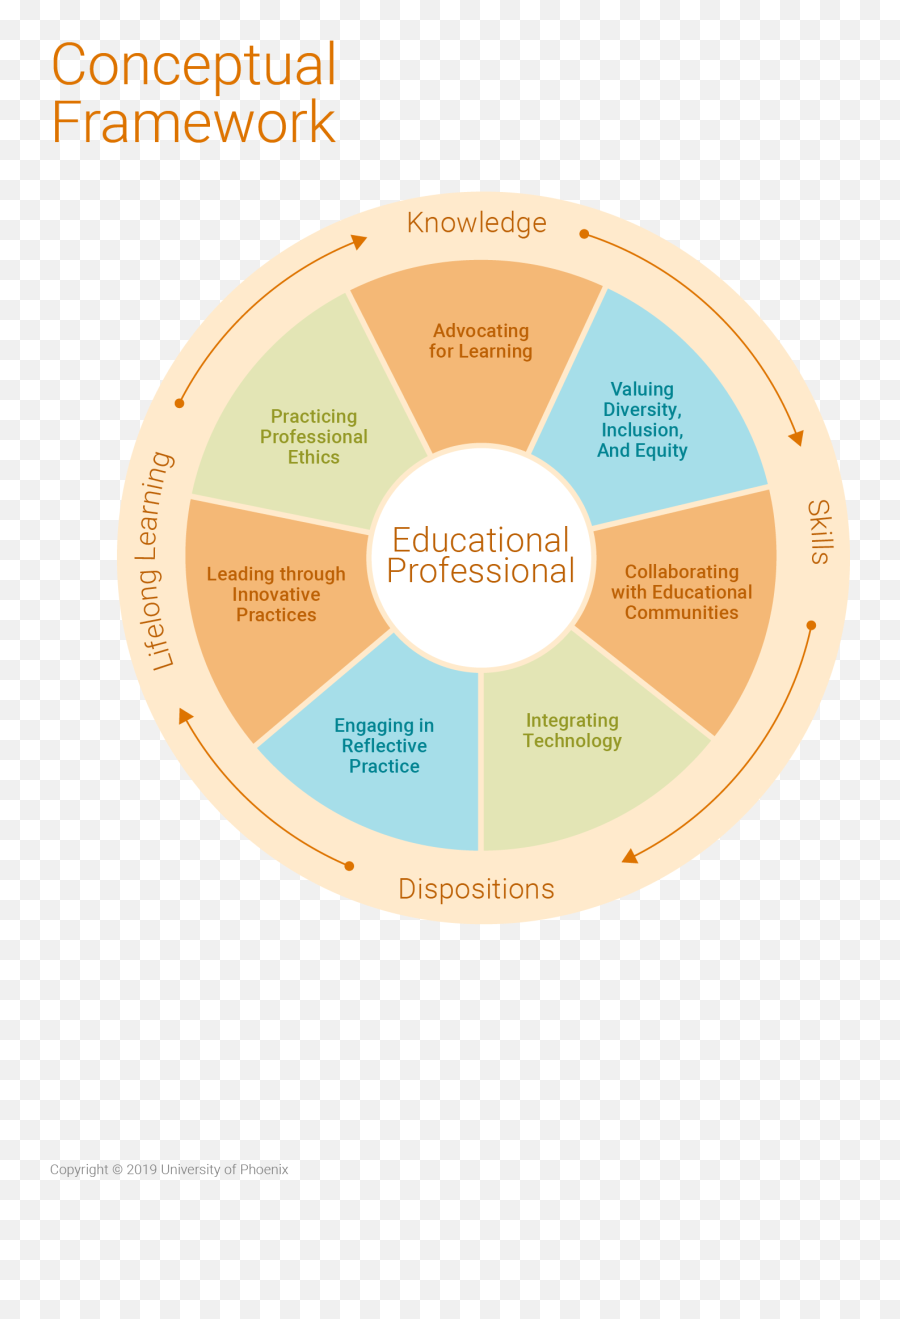 Conceptual Framework - Conceptual Framework About New Normal Education Emoji,University Of Phoenix Logo